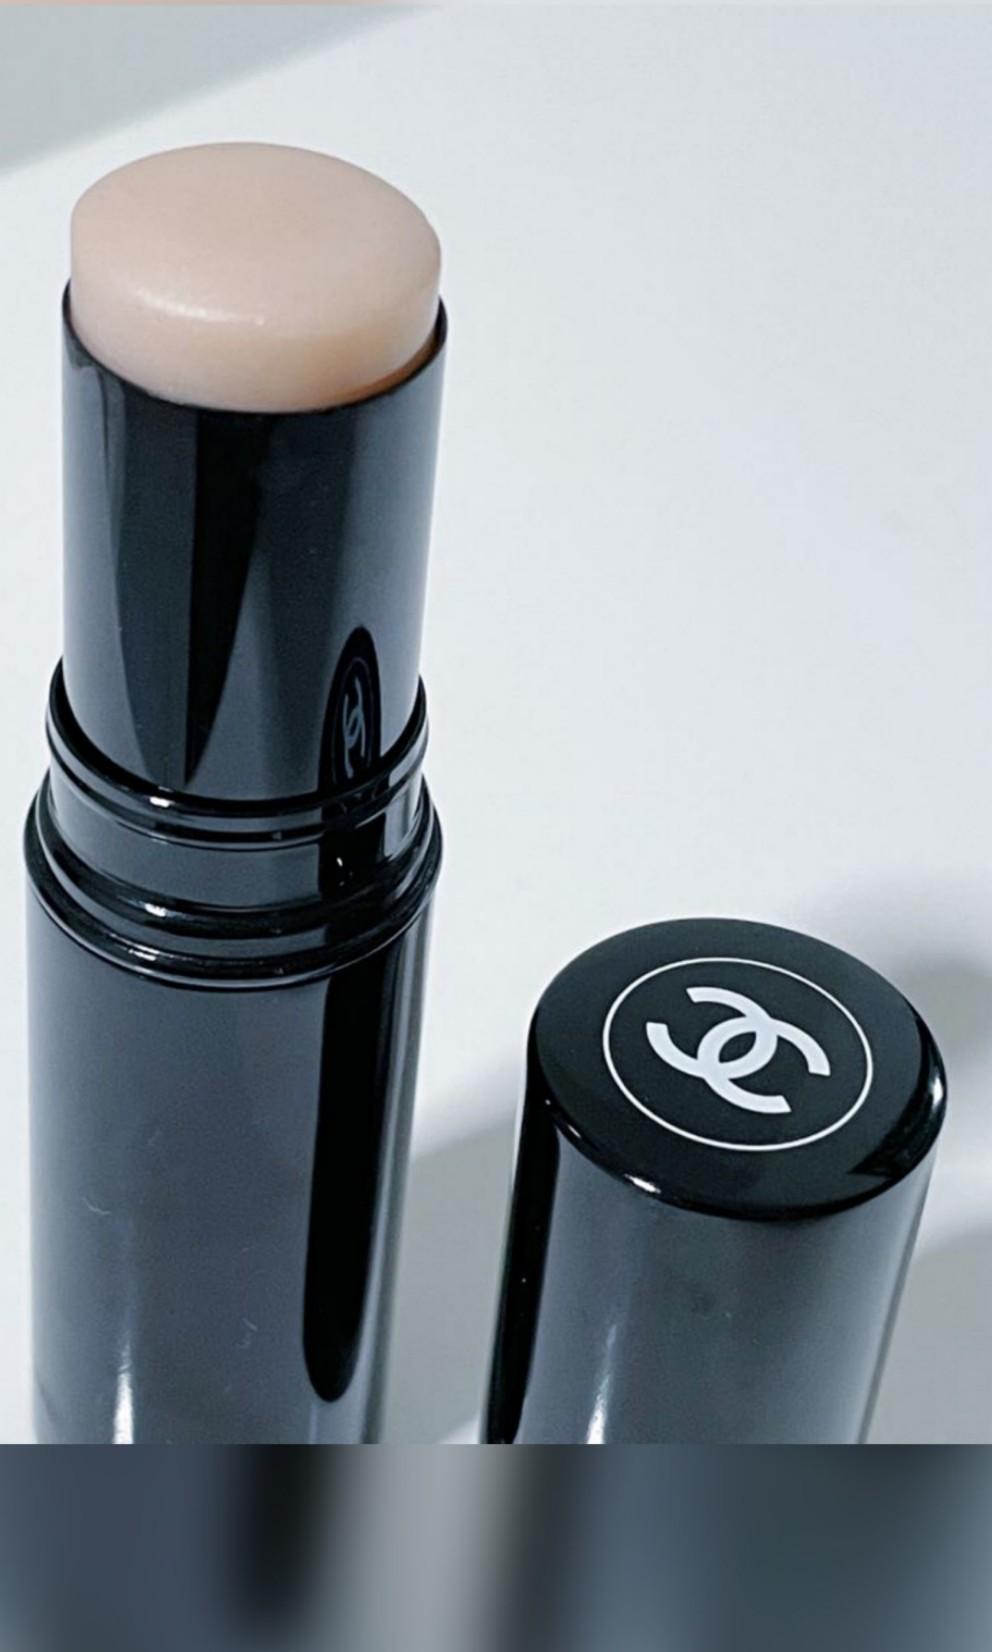 CHANEL, Makeup, Chanel Baume Essentiel Multiuse Glow Stick In Transparent